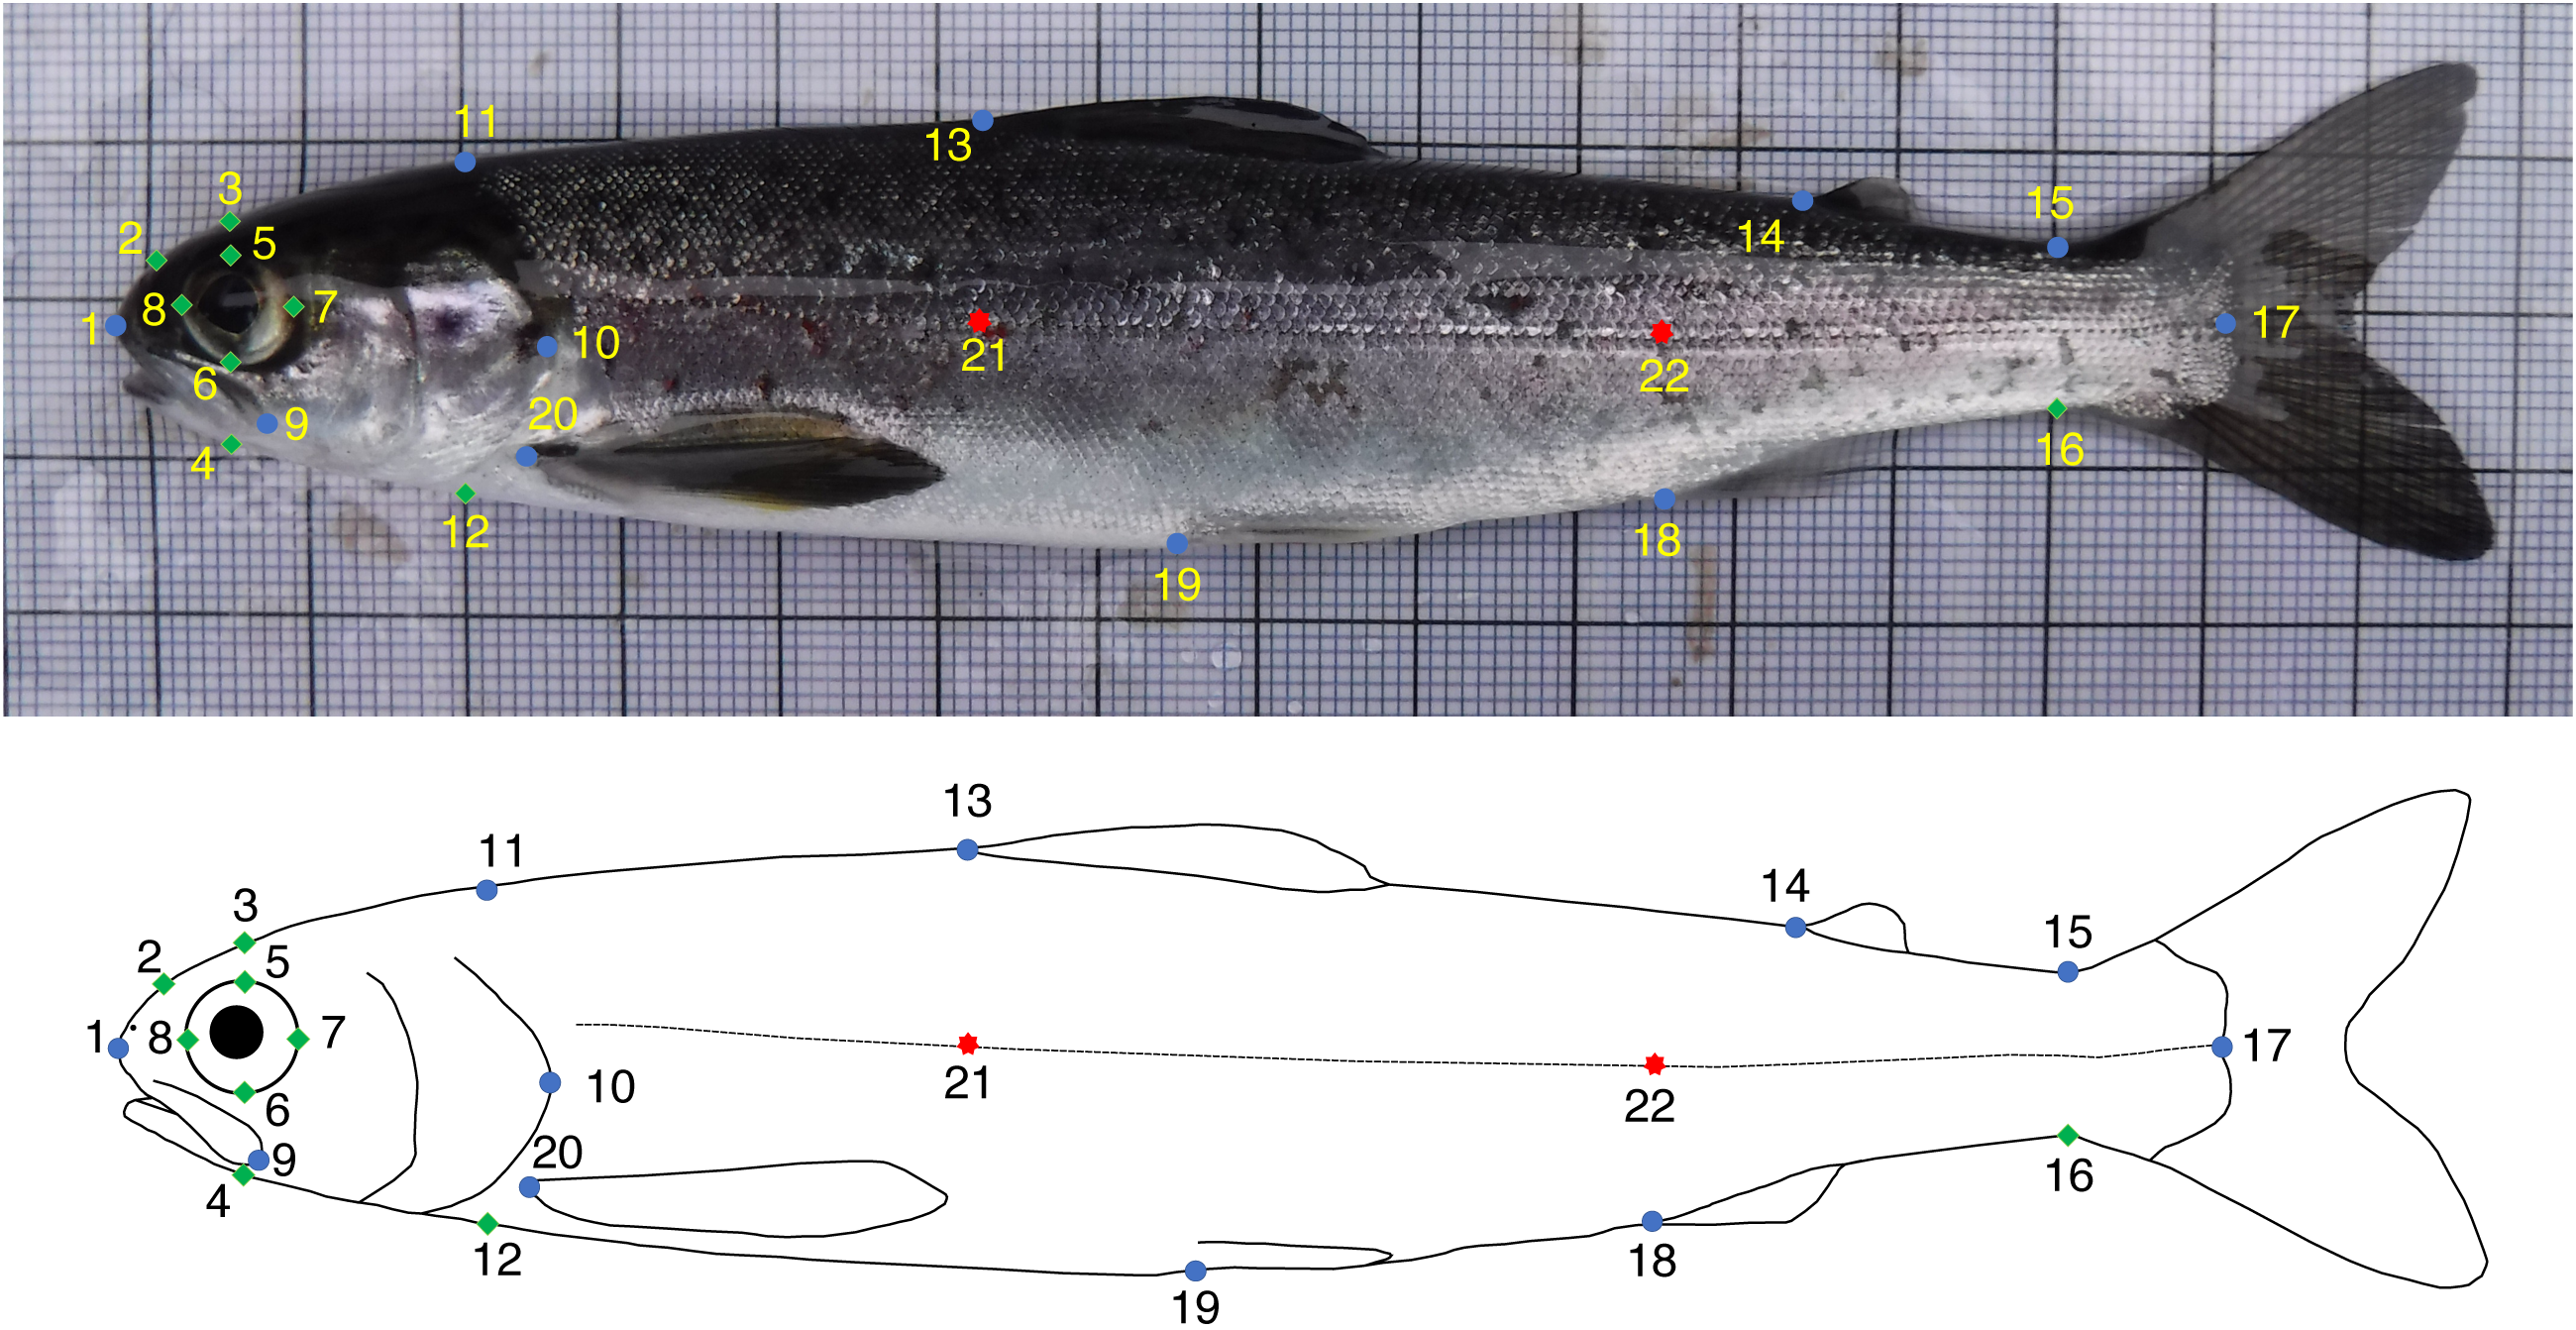 Fish (Smolt) Measuring Board, 30 cm Length